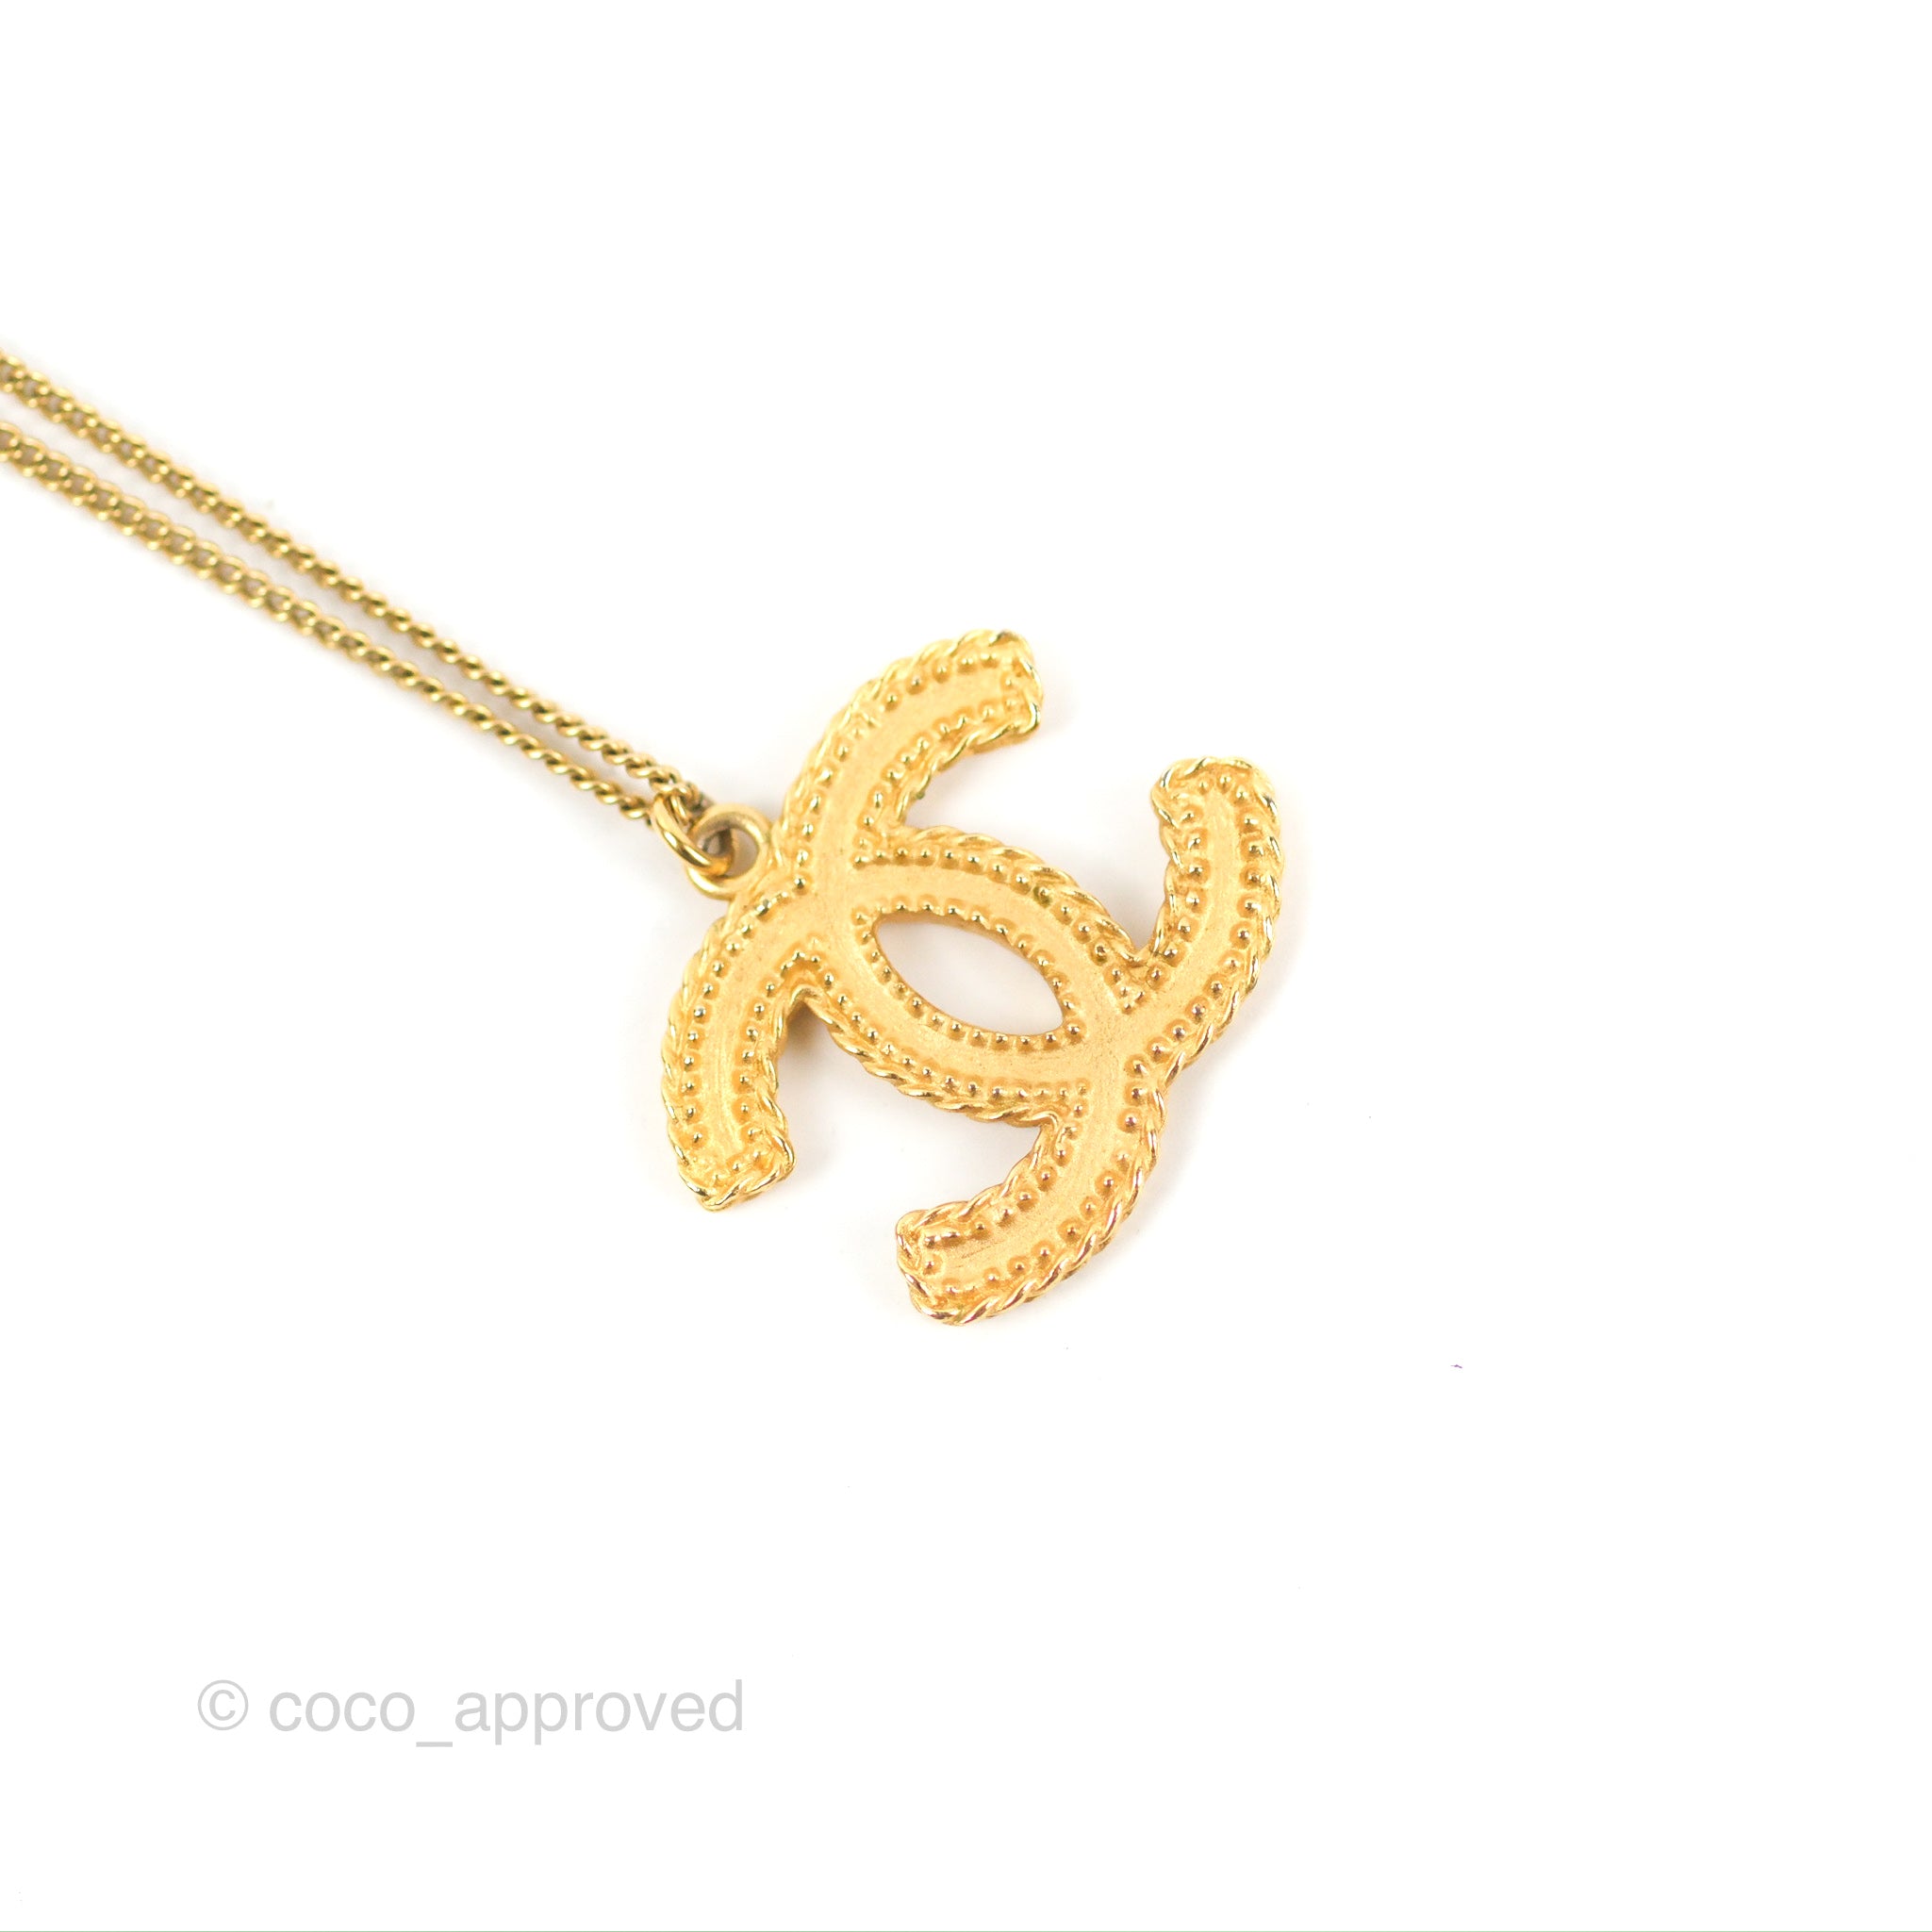 chanel necklace cc logo gold